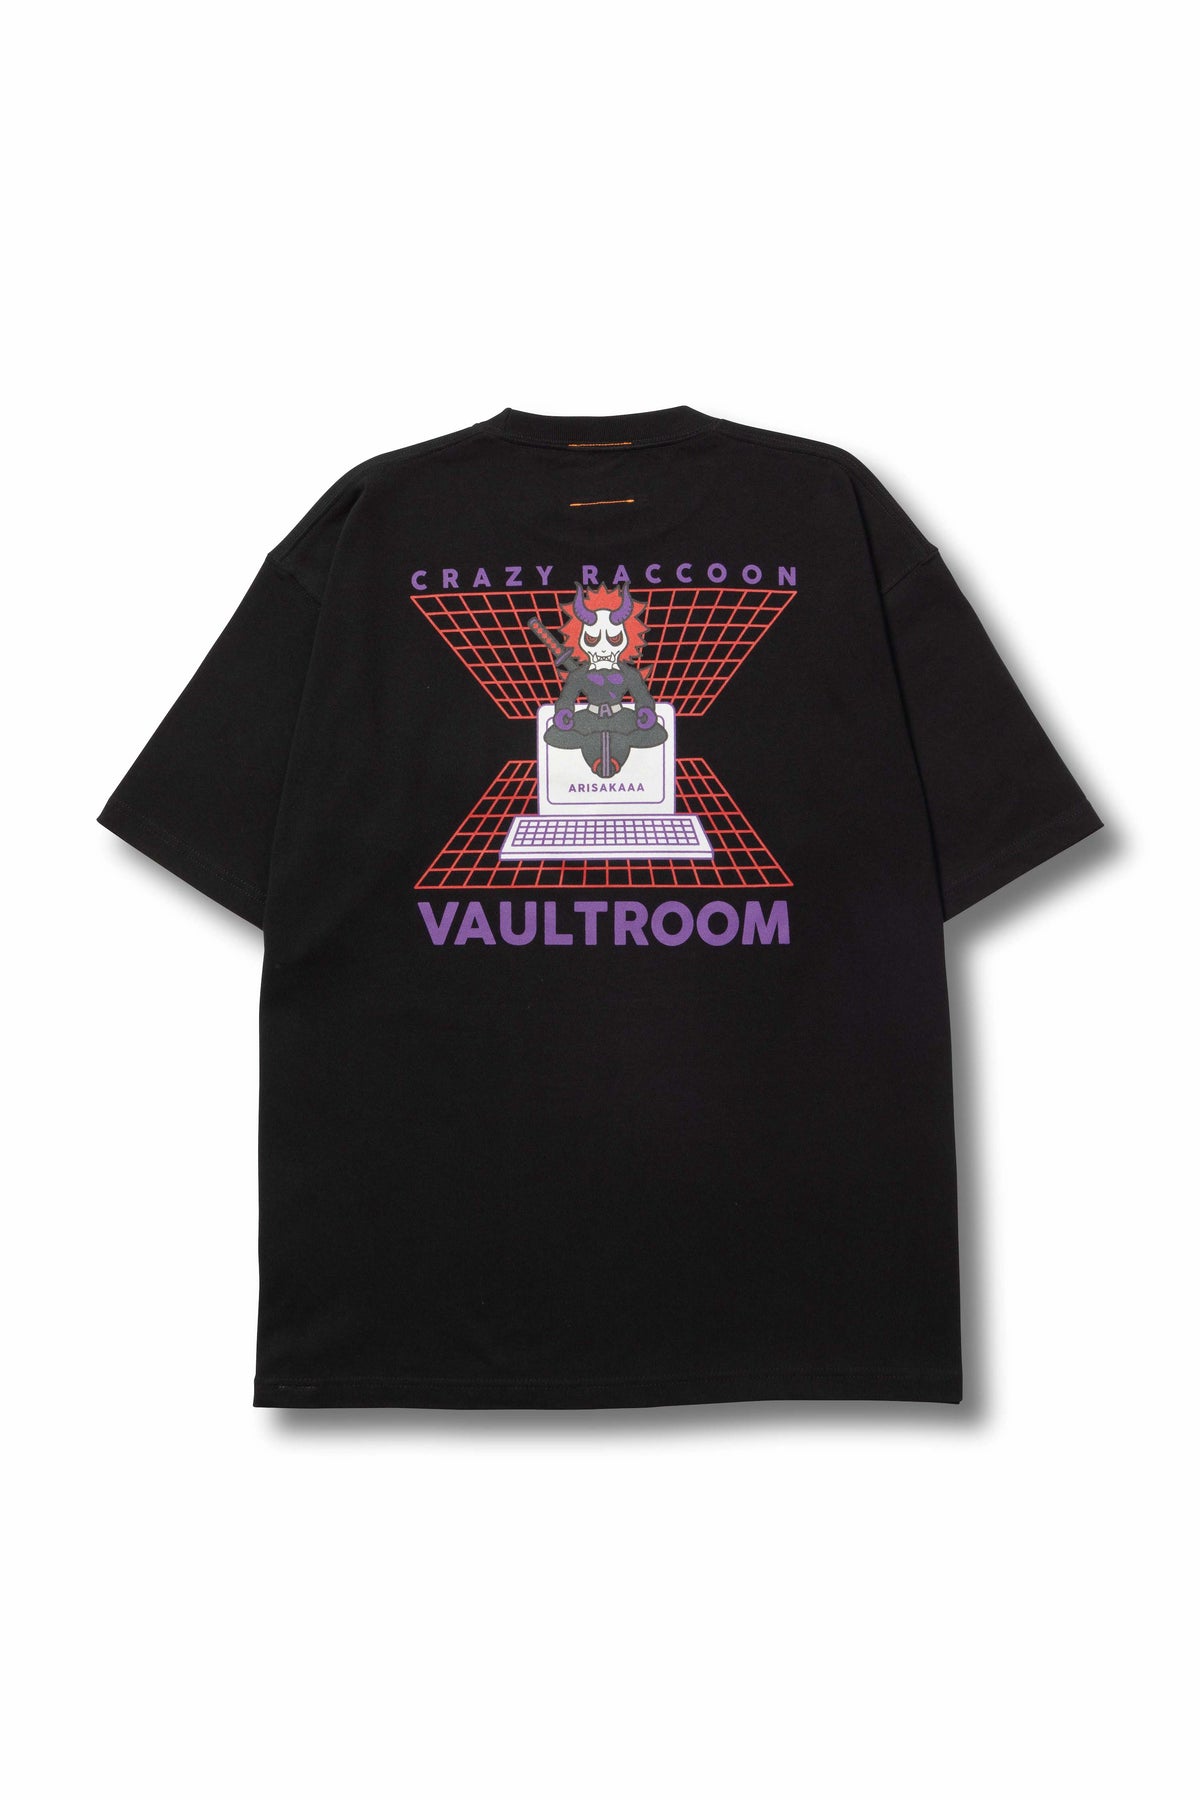 vaultroom SqLA TEE 【サイズ】sizeLメンズ - Tシャツ/カットソー(半袖 